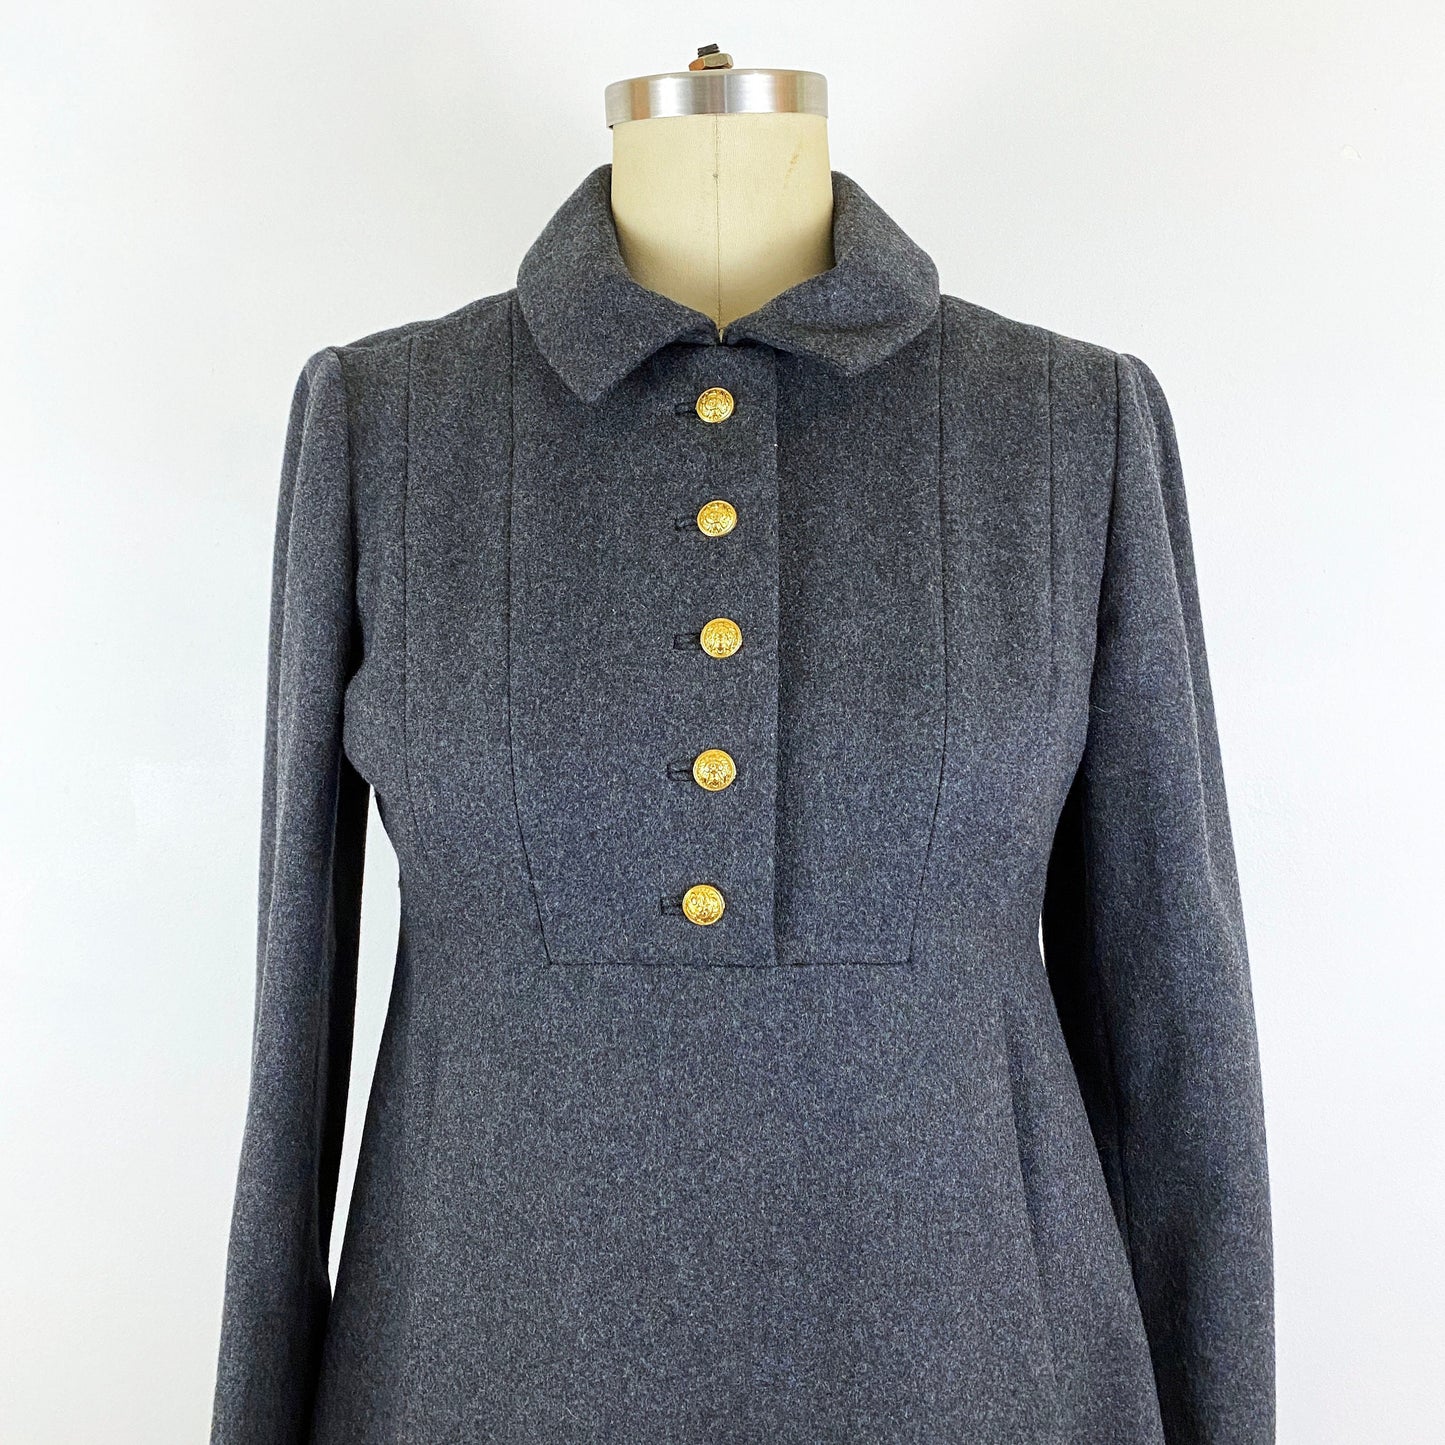 1960s Geoffrey Beene Dark Gray Wool Empire Waist Fitted A-line Mini Dress Military Minimalist Mod Retro Designer / Size Small 4/6